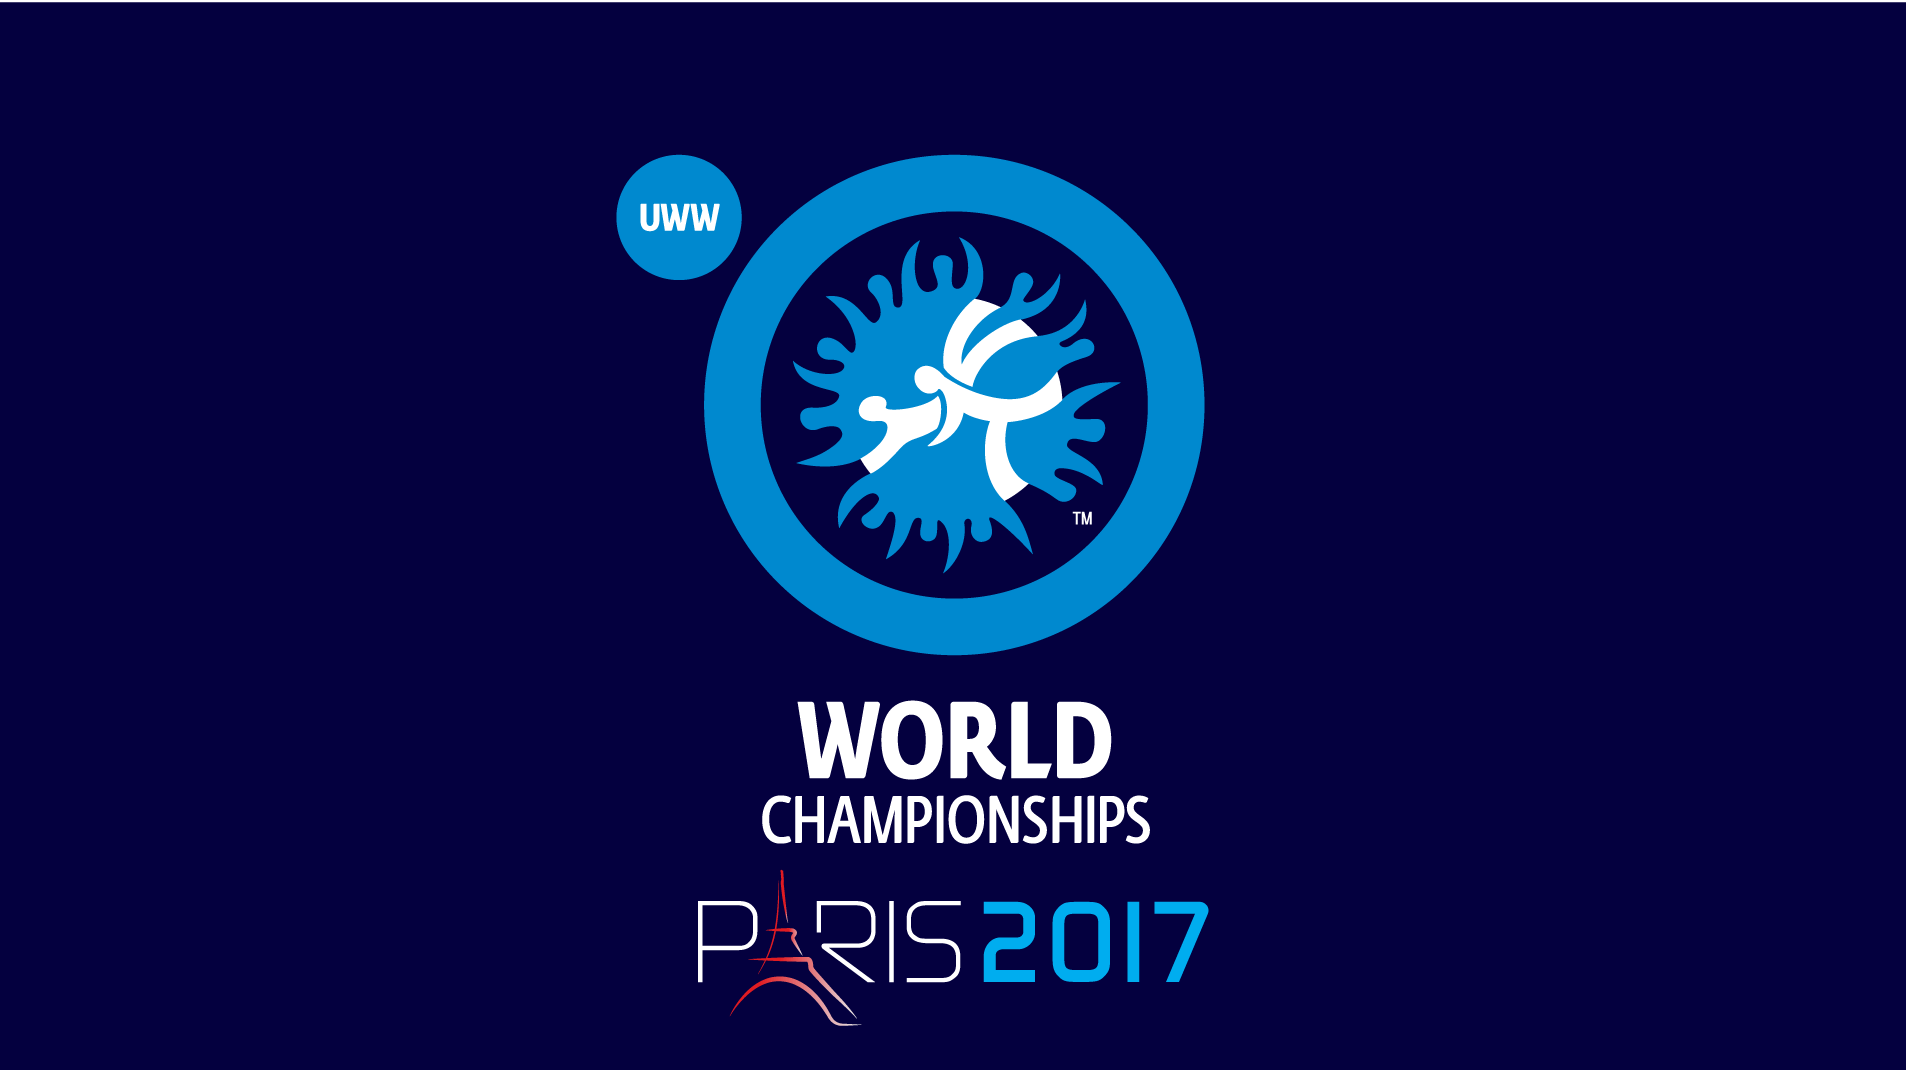 United Wrestling Logo - World Championships | United World Wrestling